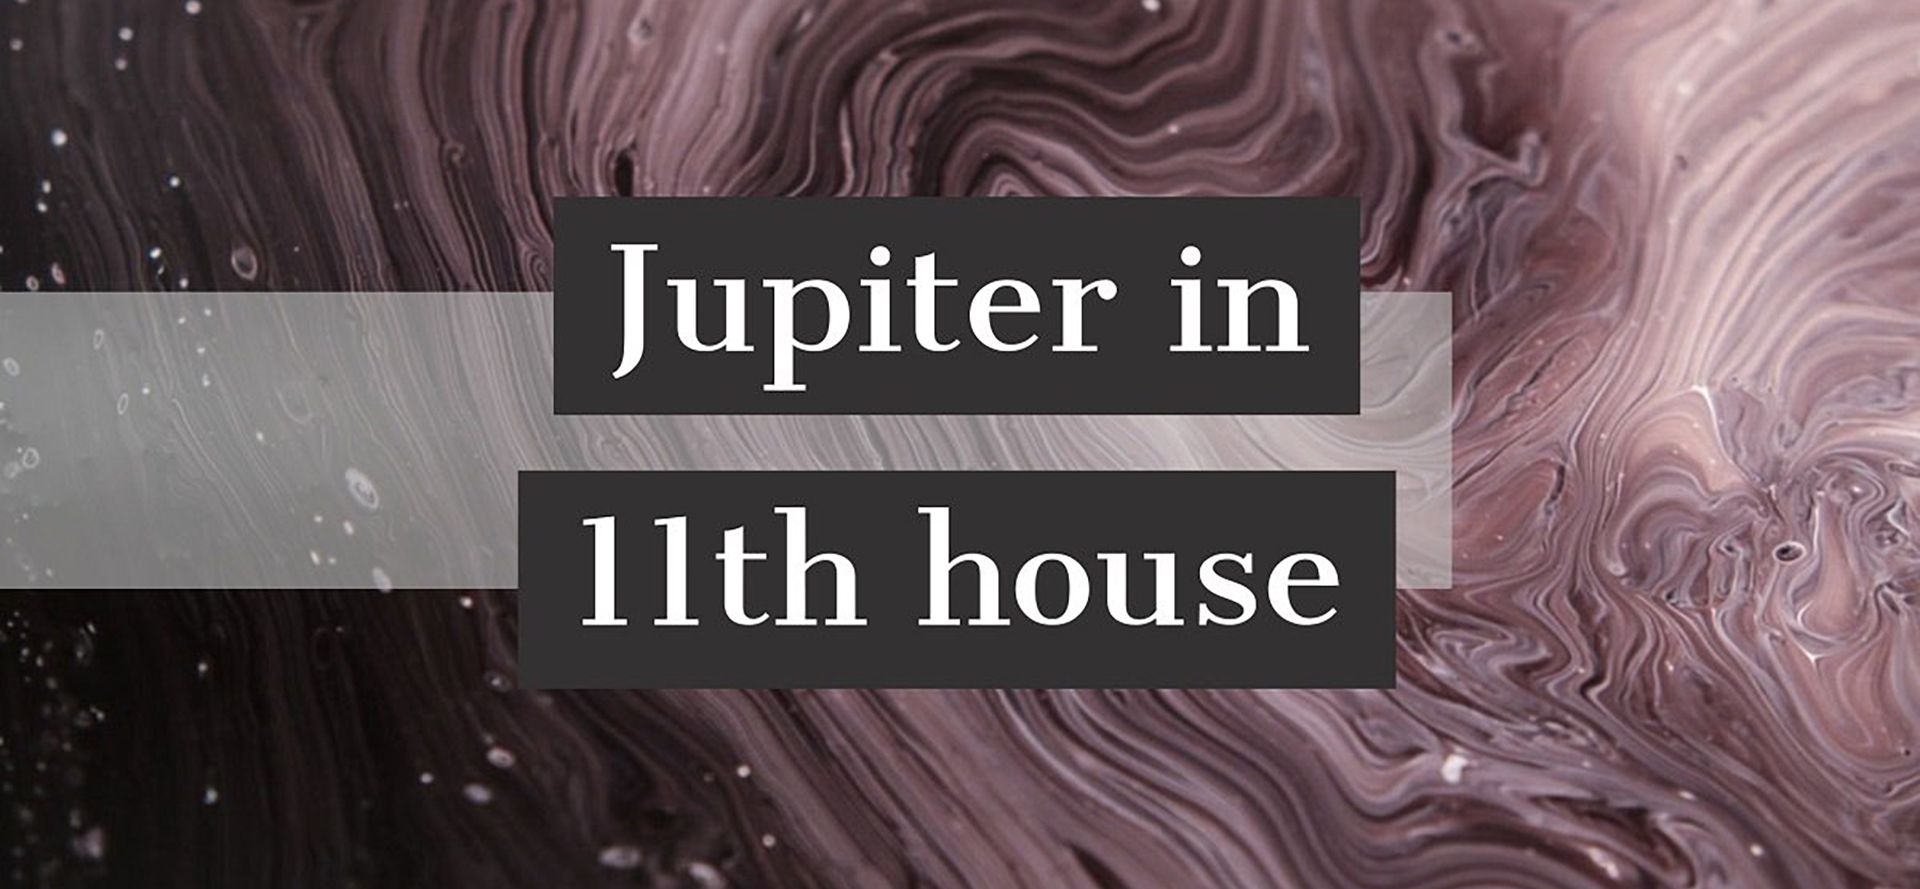 Jupiter in 11th house.